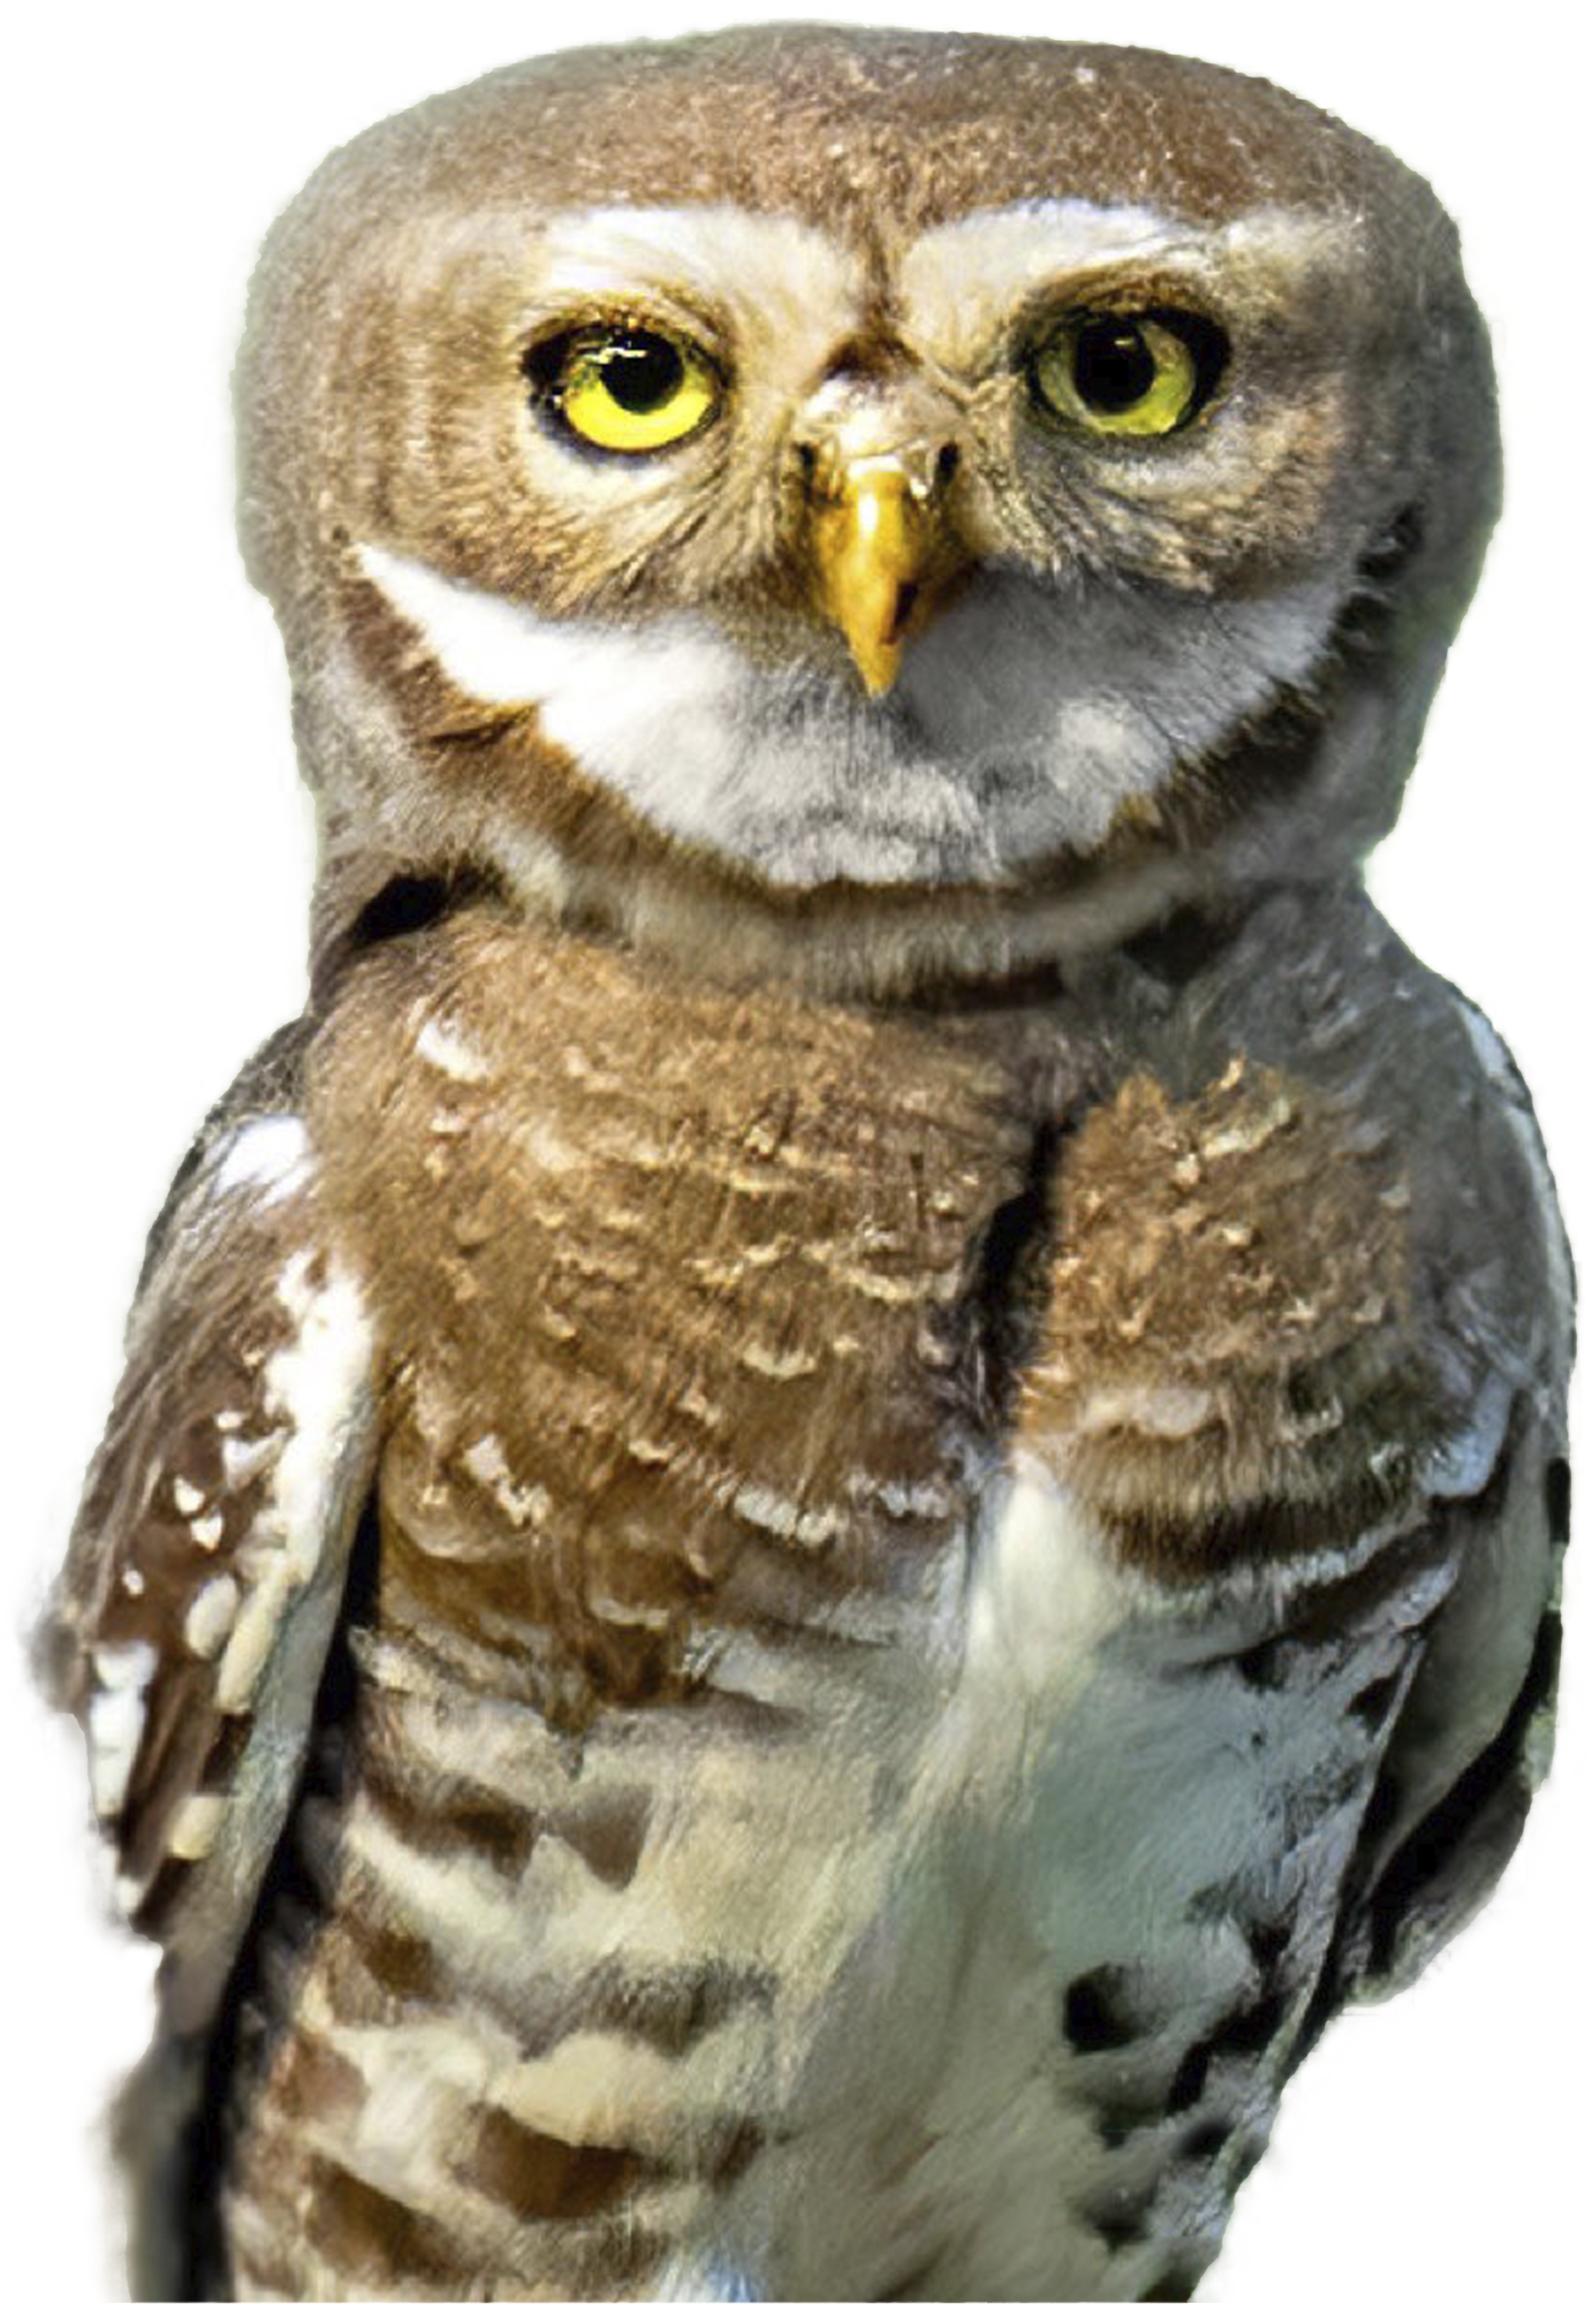 An image of an owl